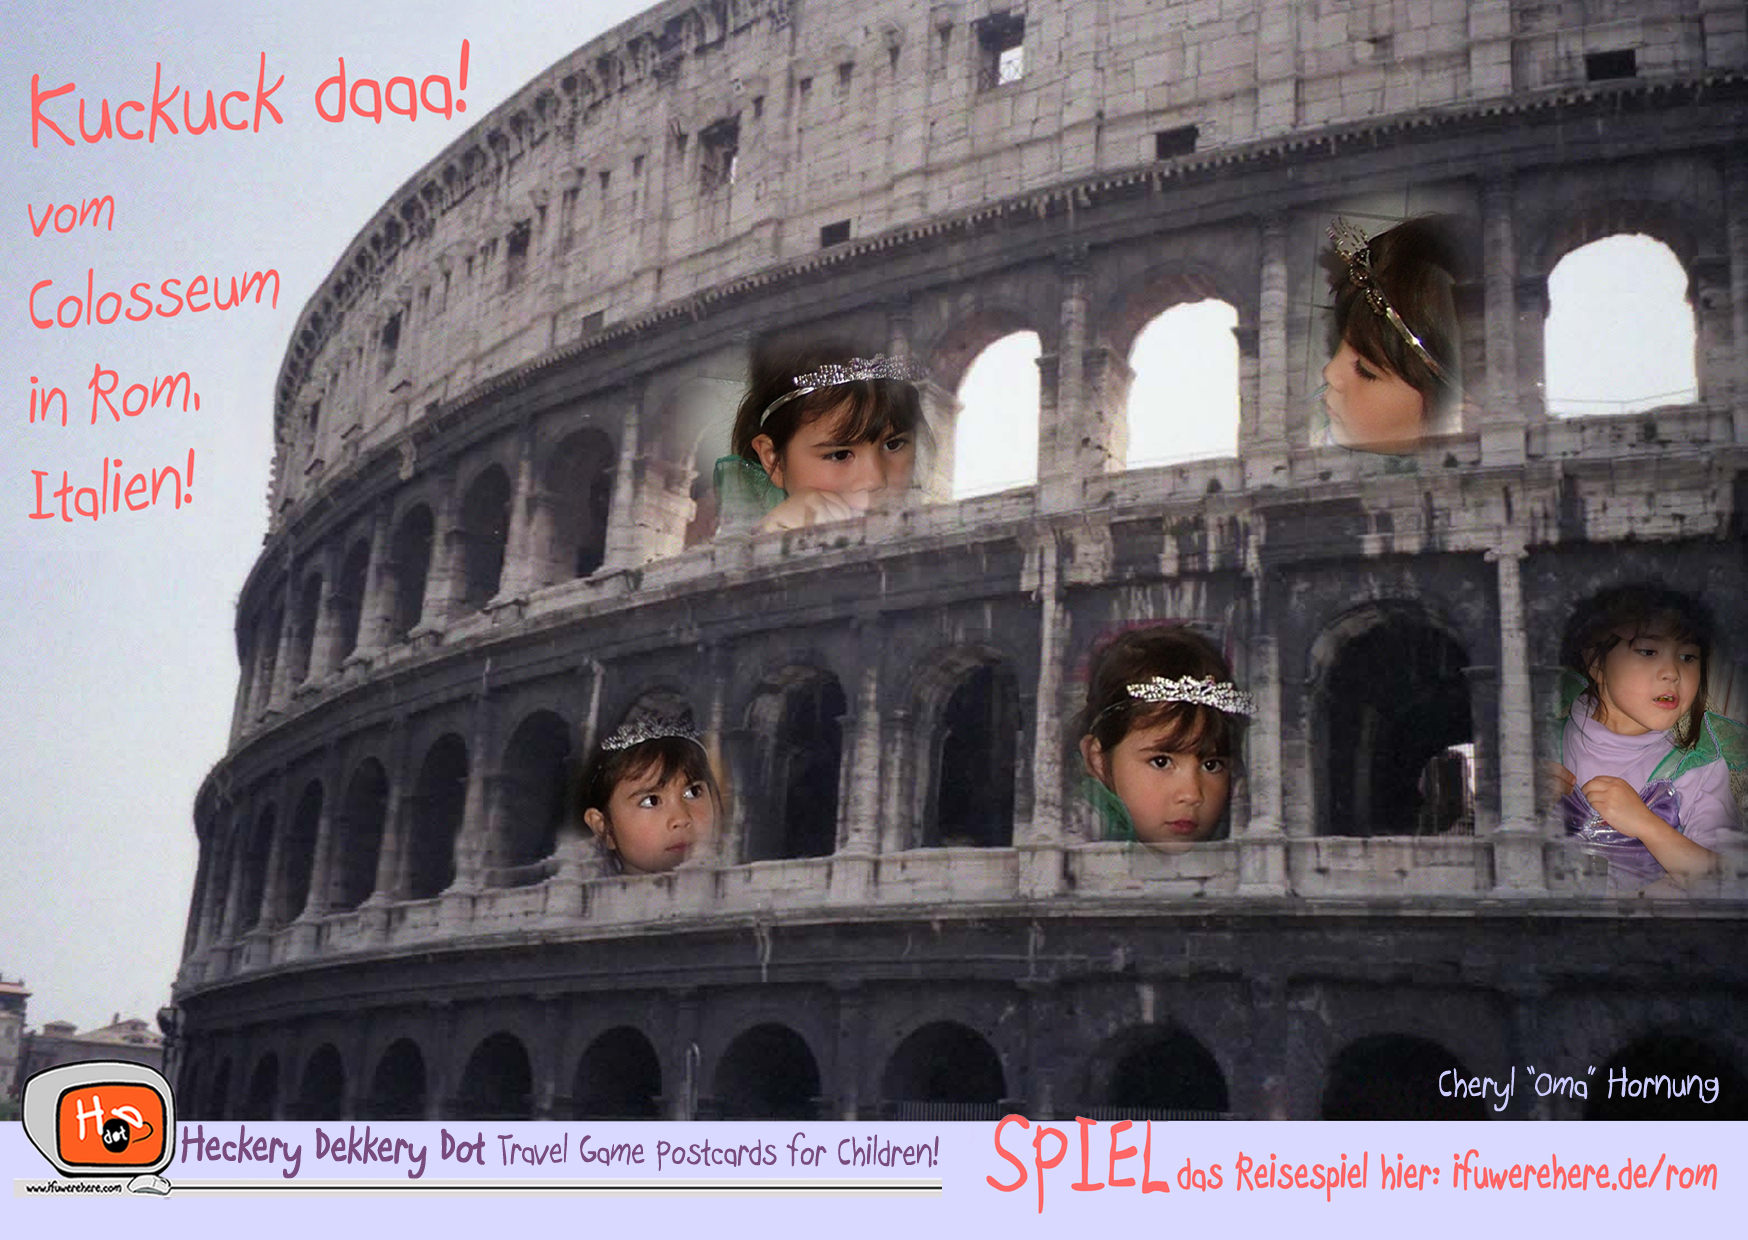 (6) Verlier dein Diadem nicht!  Kuckuck da: das Colosseum!